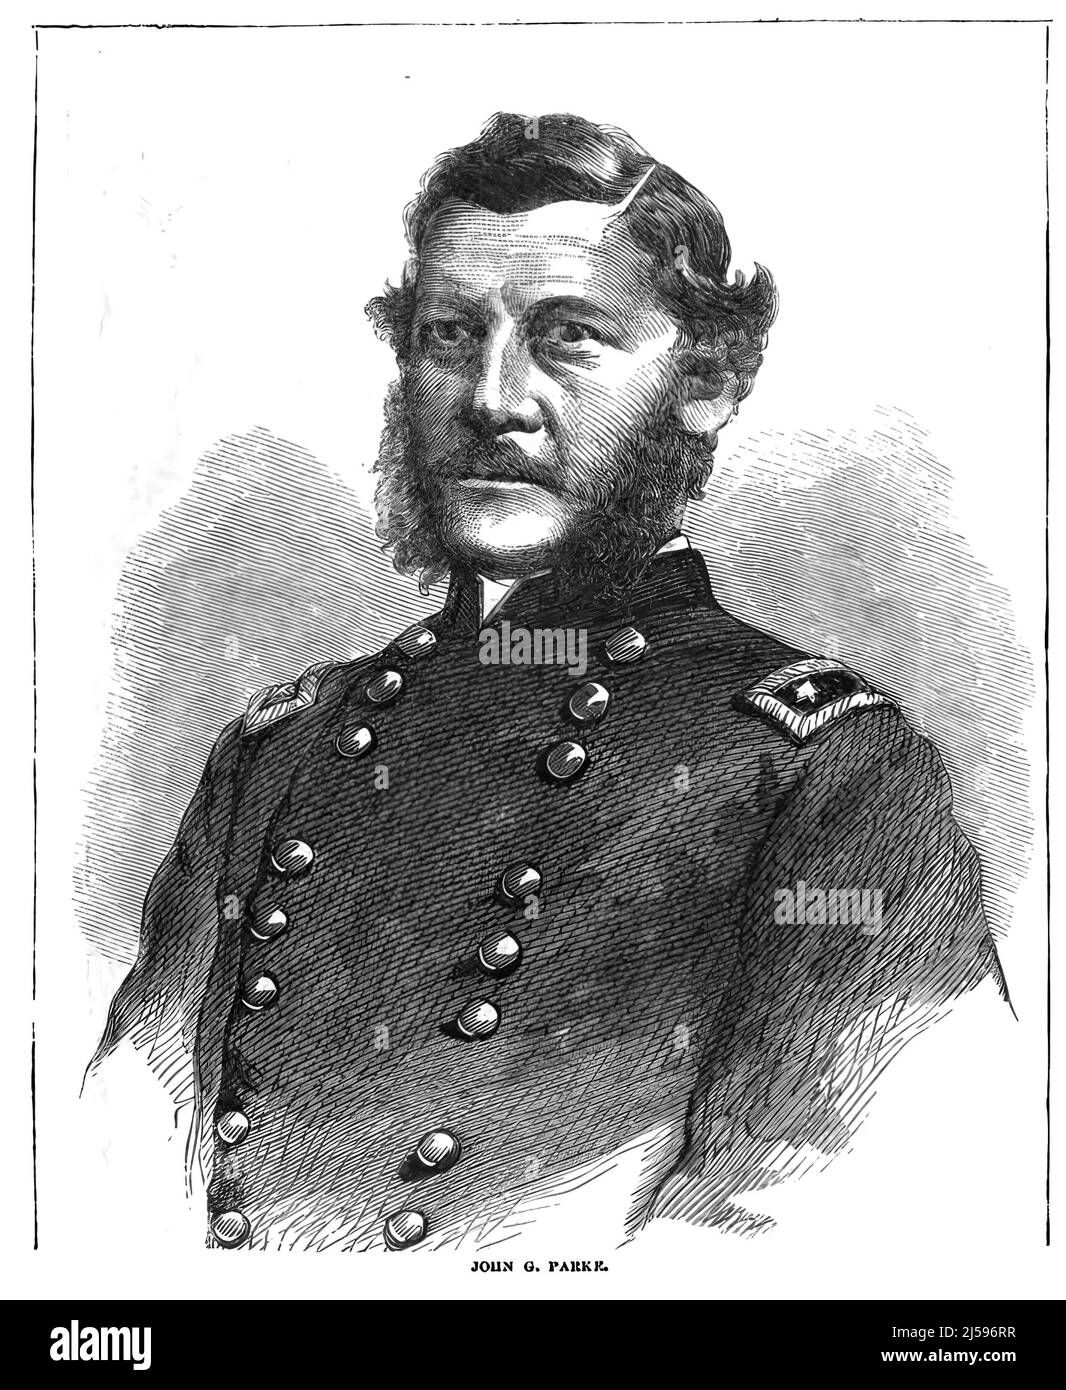 Portrait of John Grubb Parke, Union Army Major General in the American Civil War. 19th century illustration Stock Photo